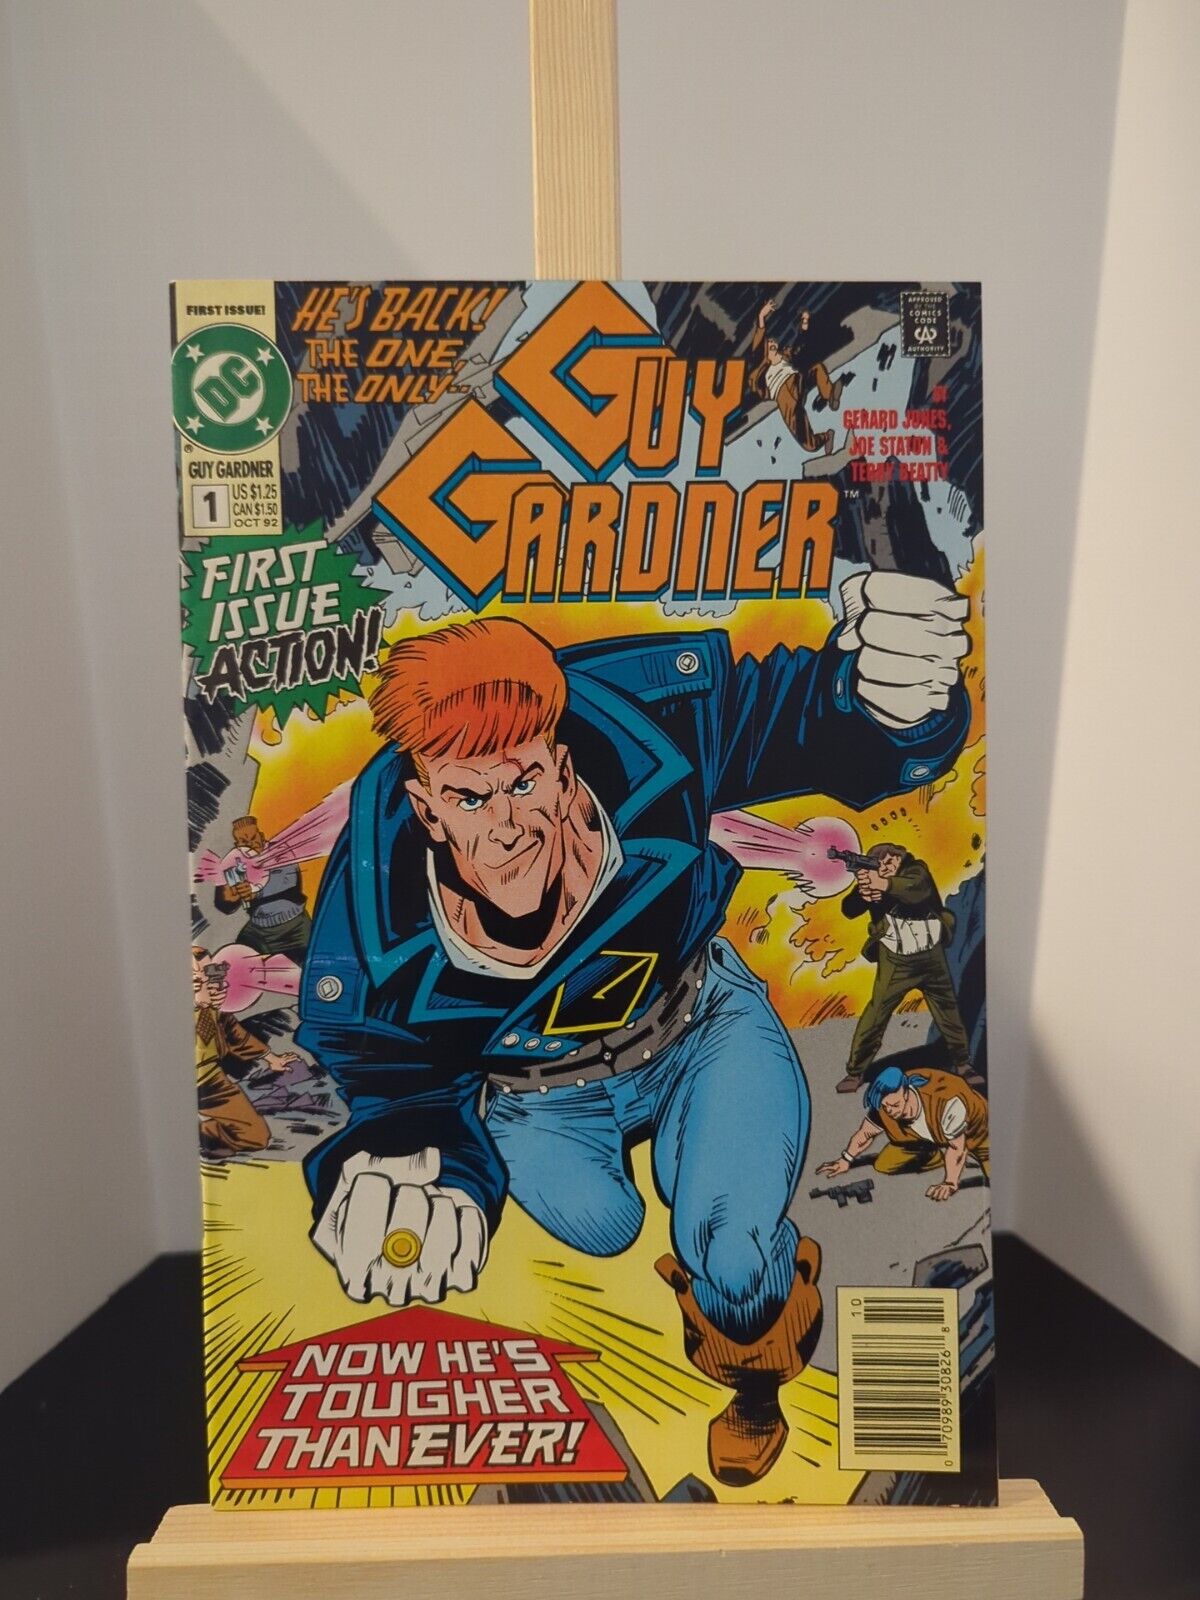 Guy Gardner #1 (DC Comics, October 1992)